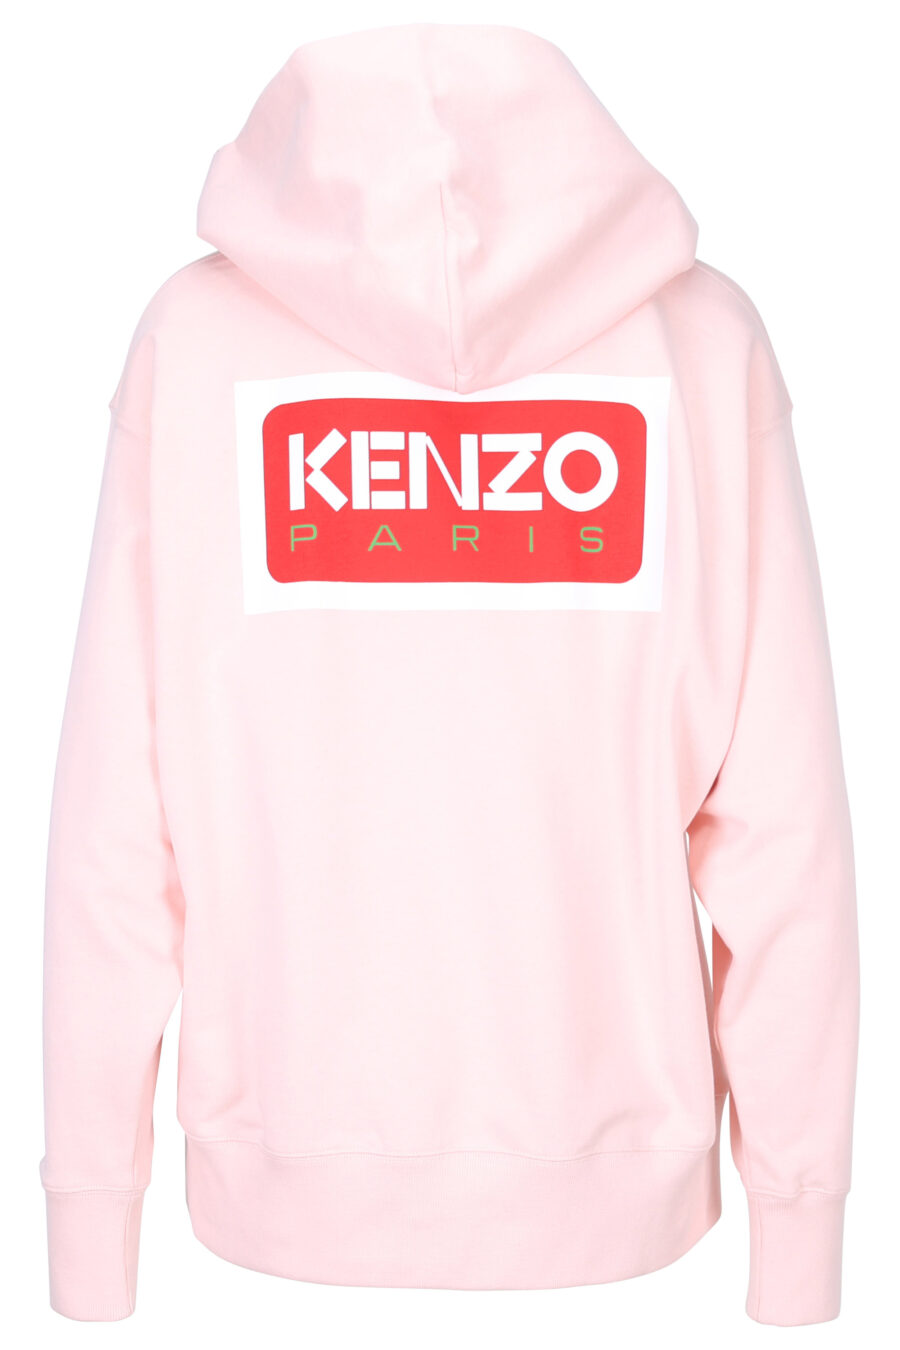 Rosa Kapuzensweatshirt in Übergröße mit "kenzo paris" Logo - 3612230515734 2